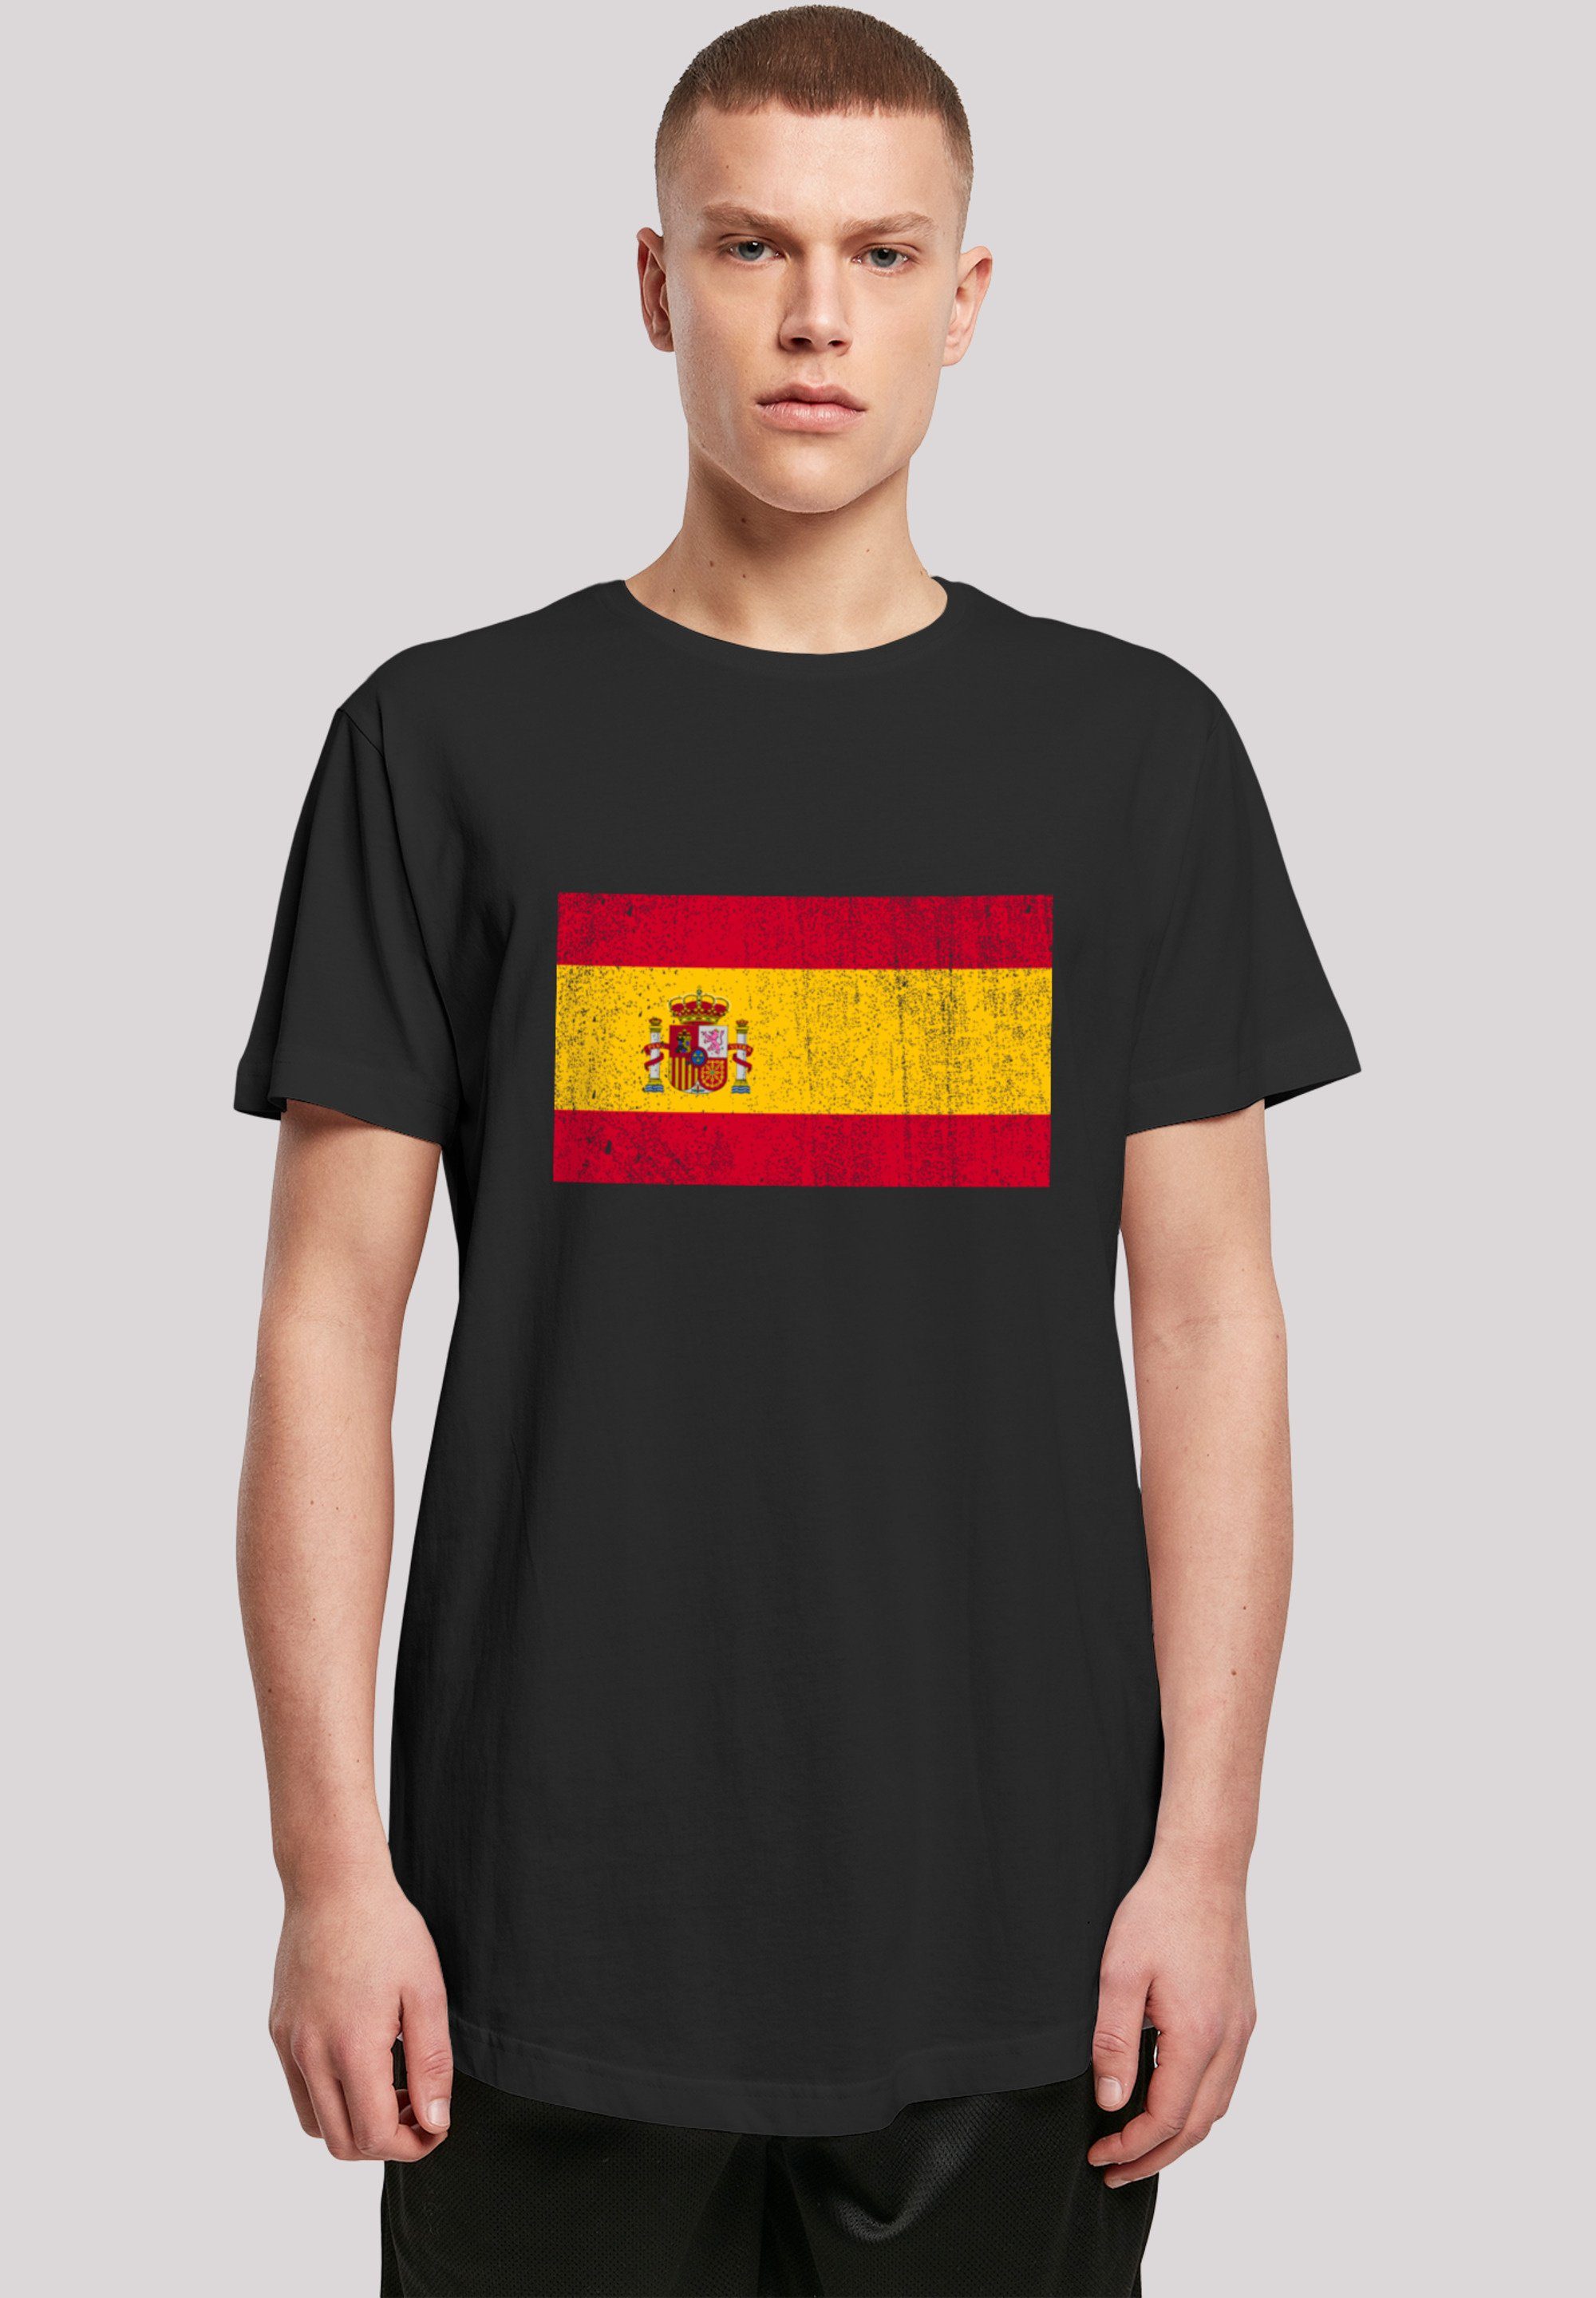 Print, groß Spanien Model Größe und Spain F4NT4STIC T-Shirt trägt 180 M distressed cm ist Flagge Das